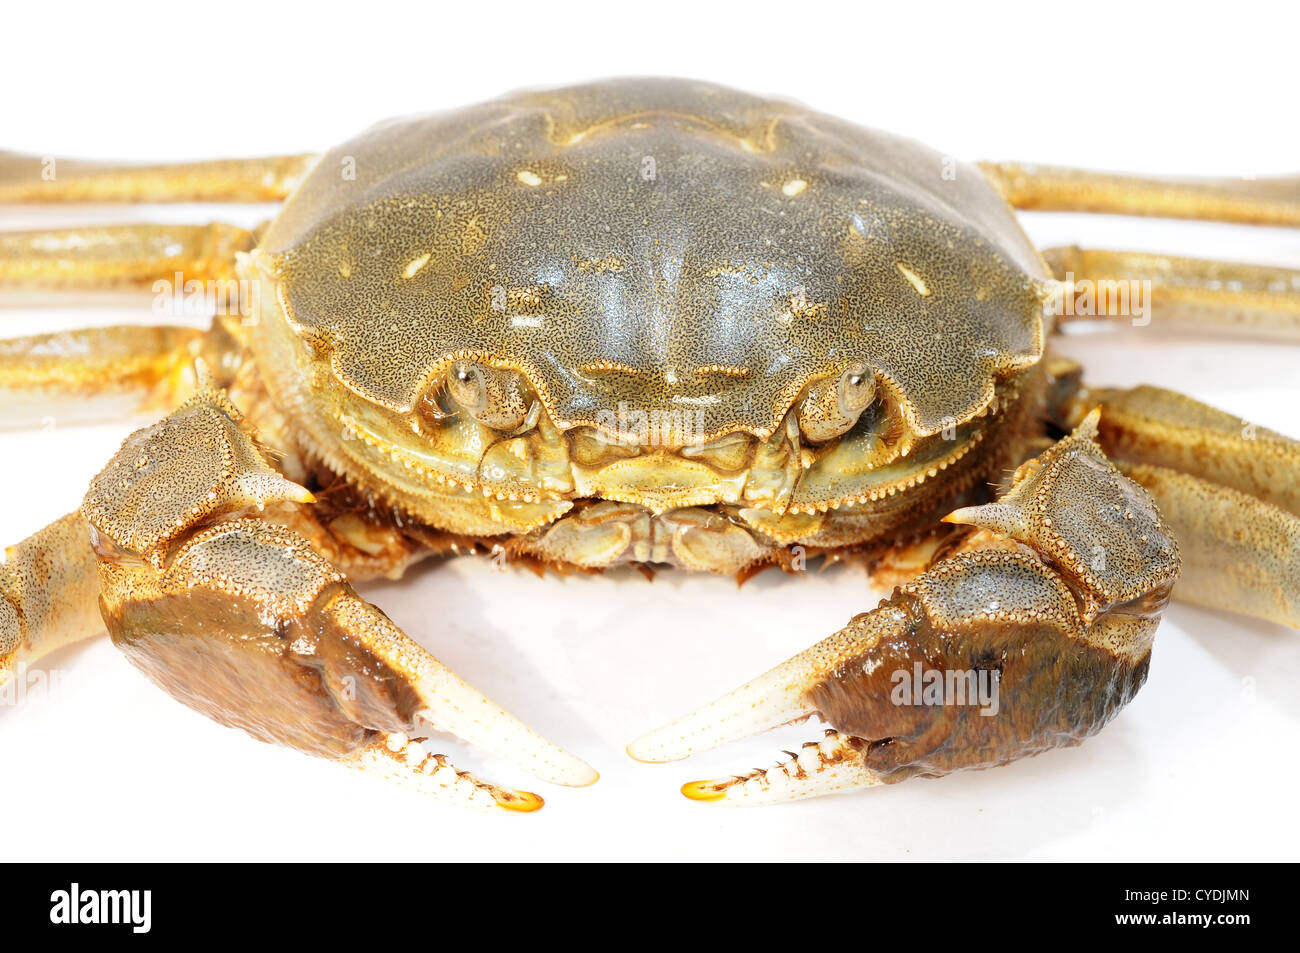 Crabe poilu ou chinois mittencrab sur fond blanc Banque D'Images